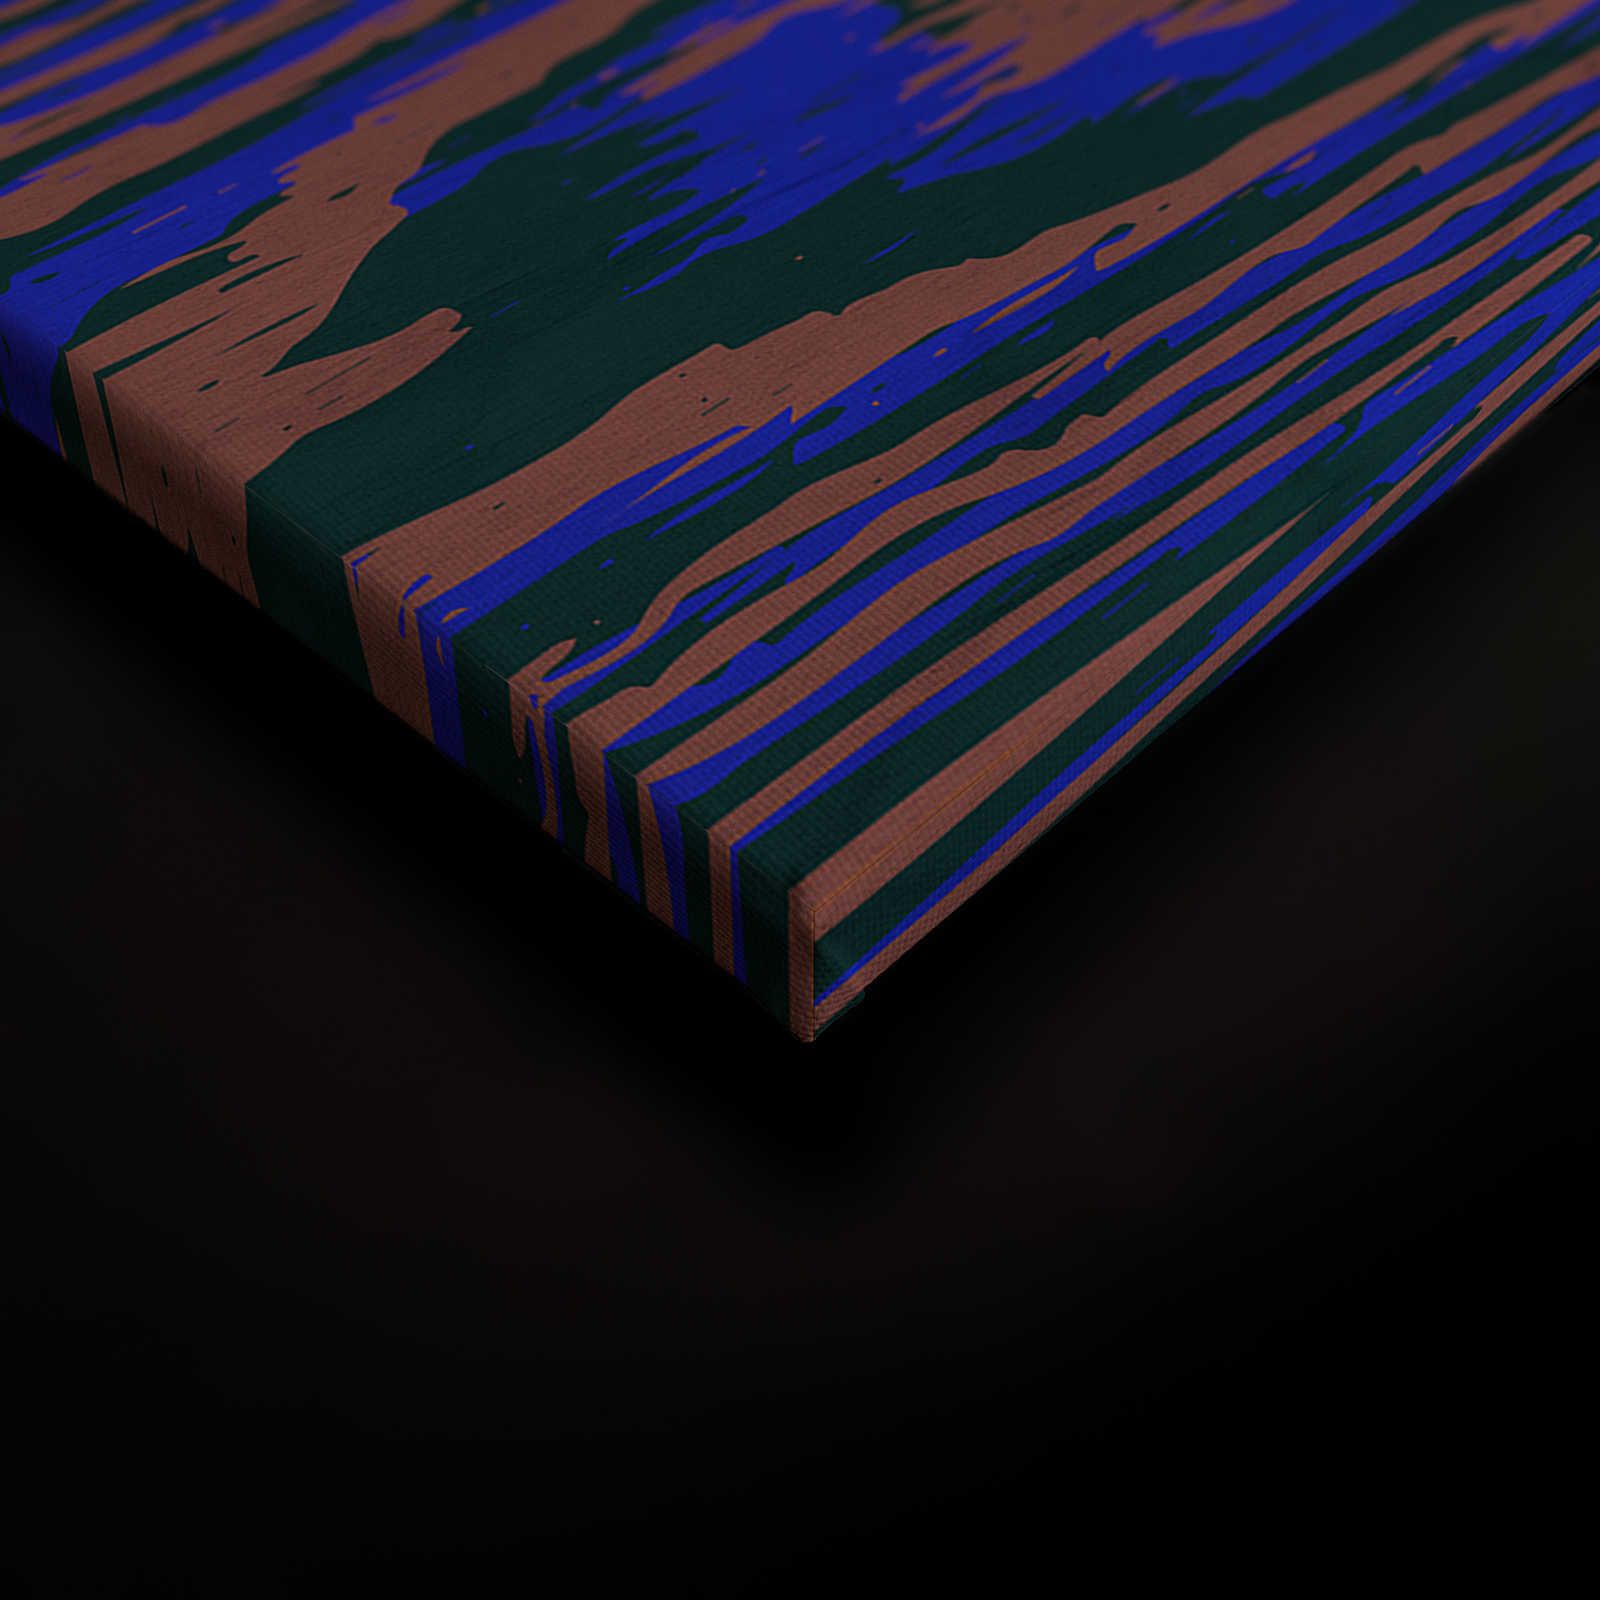             Kontiki 3 - Leinwandbild Neonfarbene Holzmaserung, Lila & Schwarz – 0,90 m x 0,60 m
        